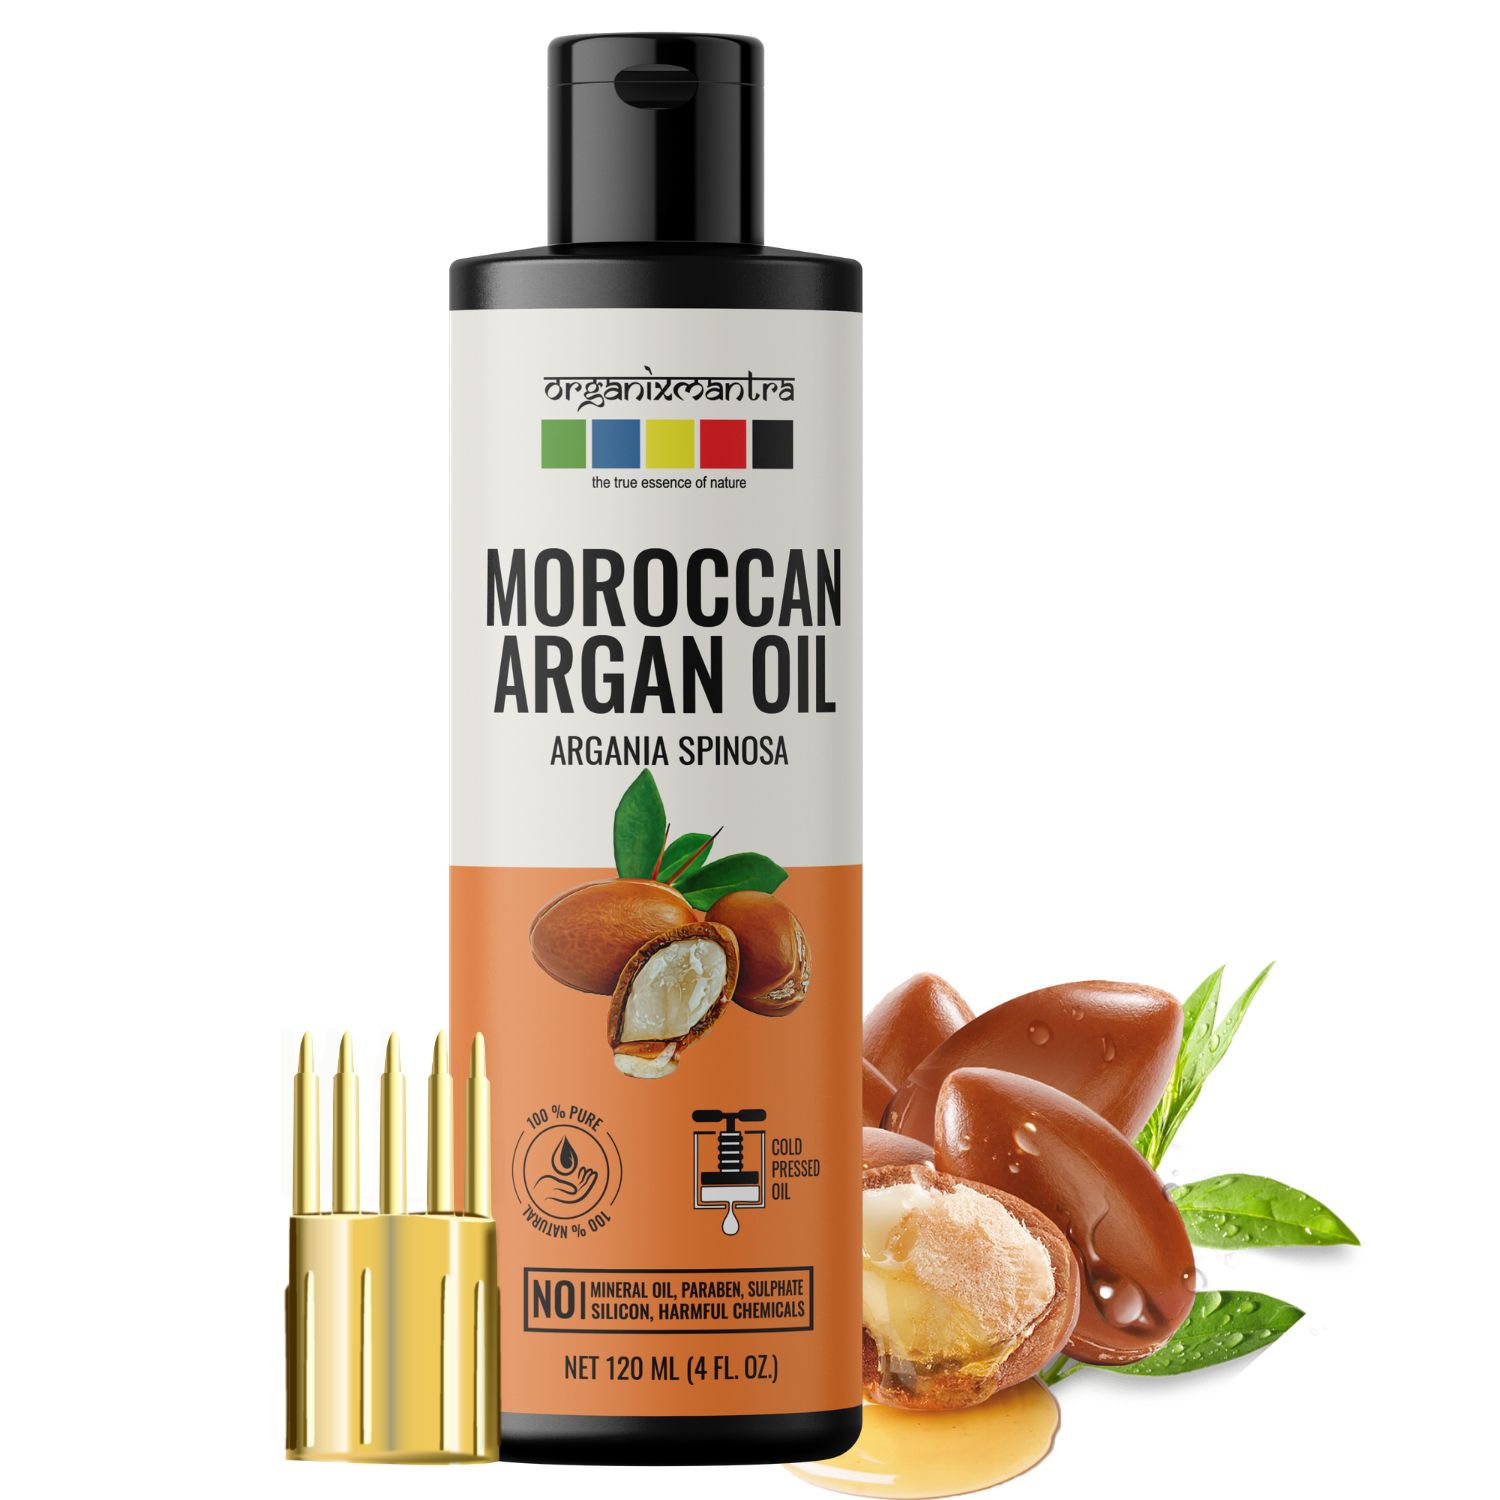     			Organix Mantra Moroccan Argan Oil, 100% Pure, Natural & Cold Pressed Organic Oil, 120ML